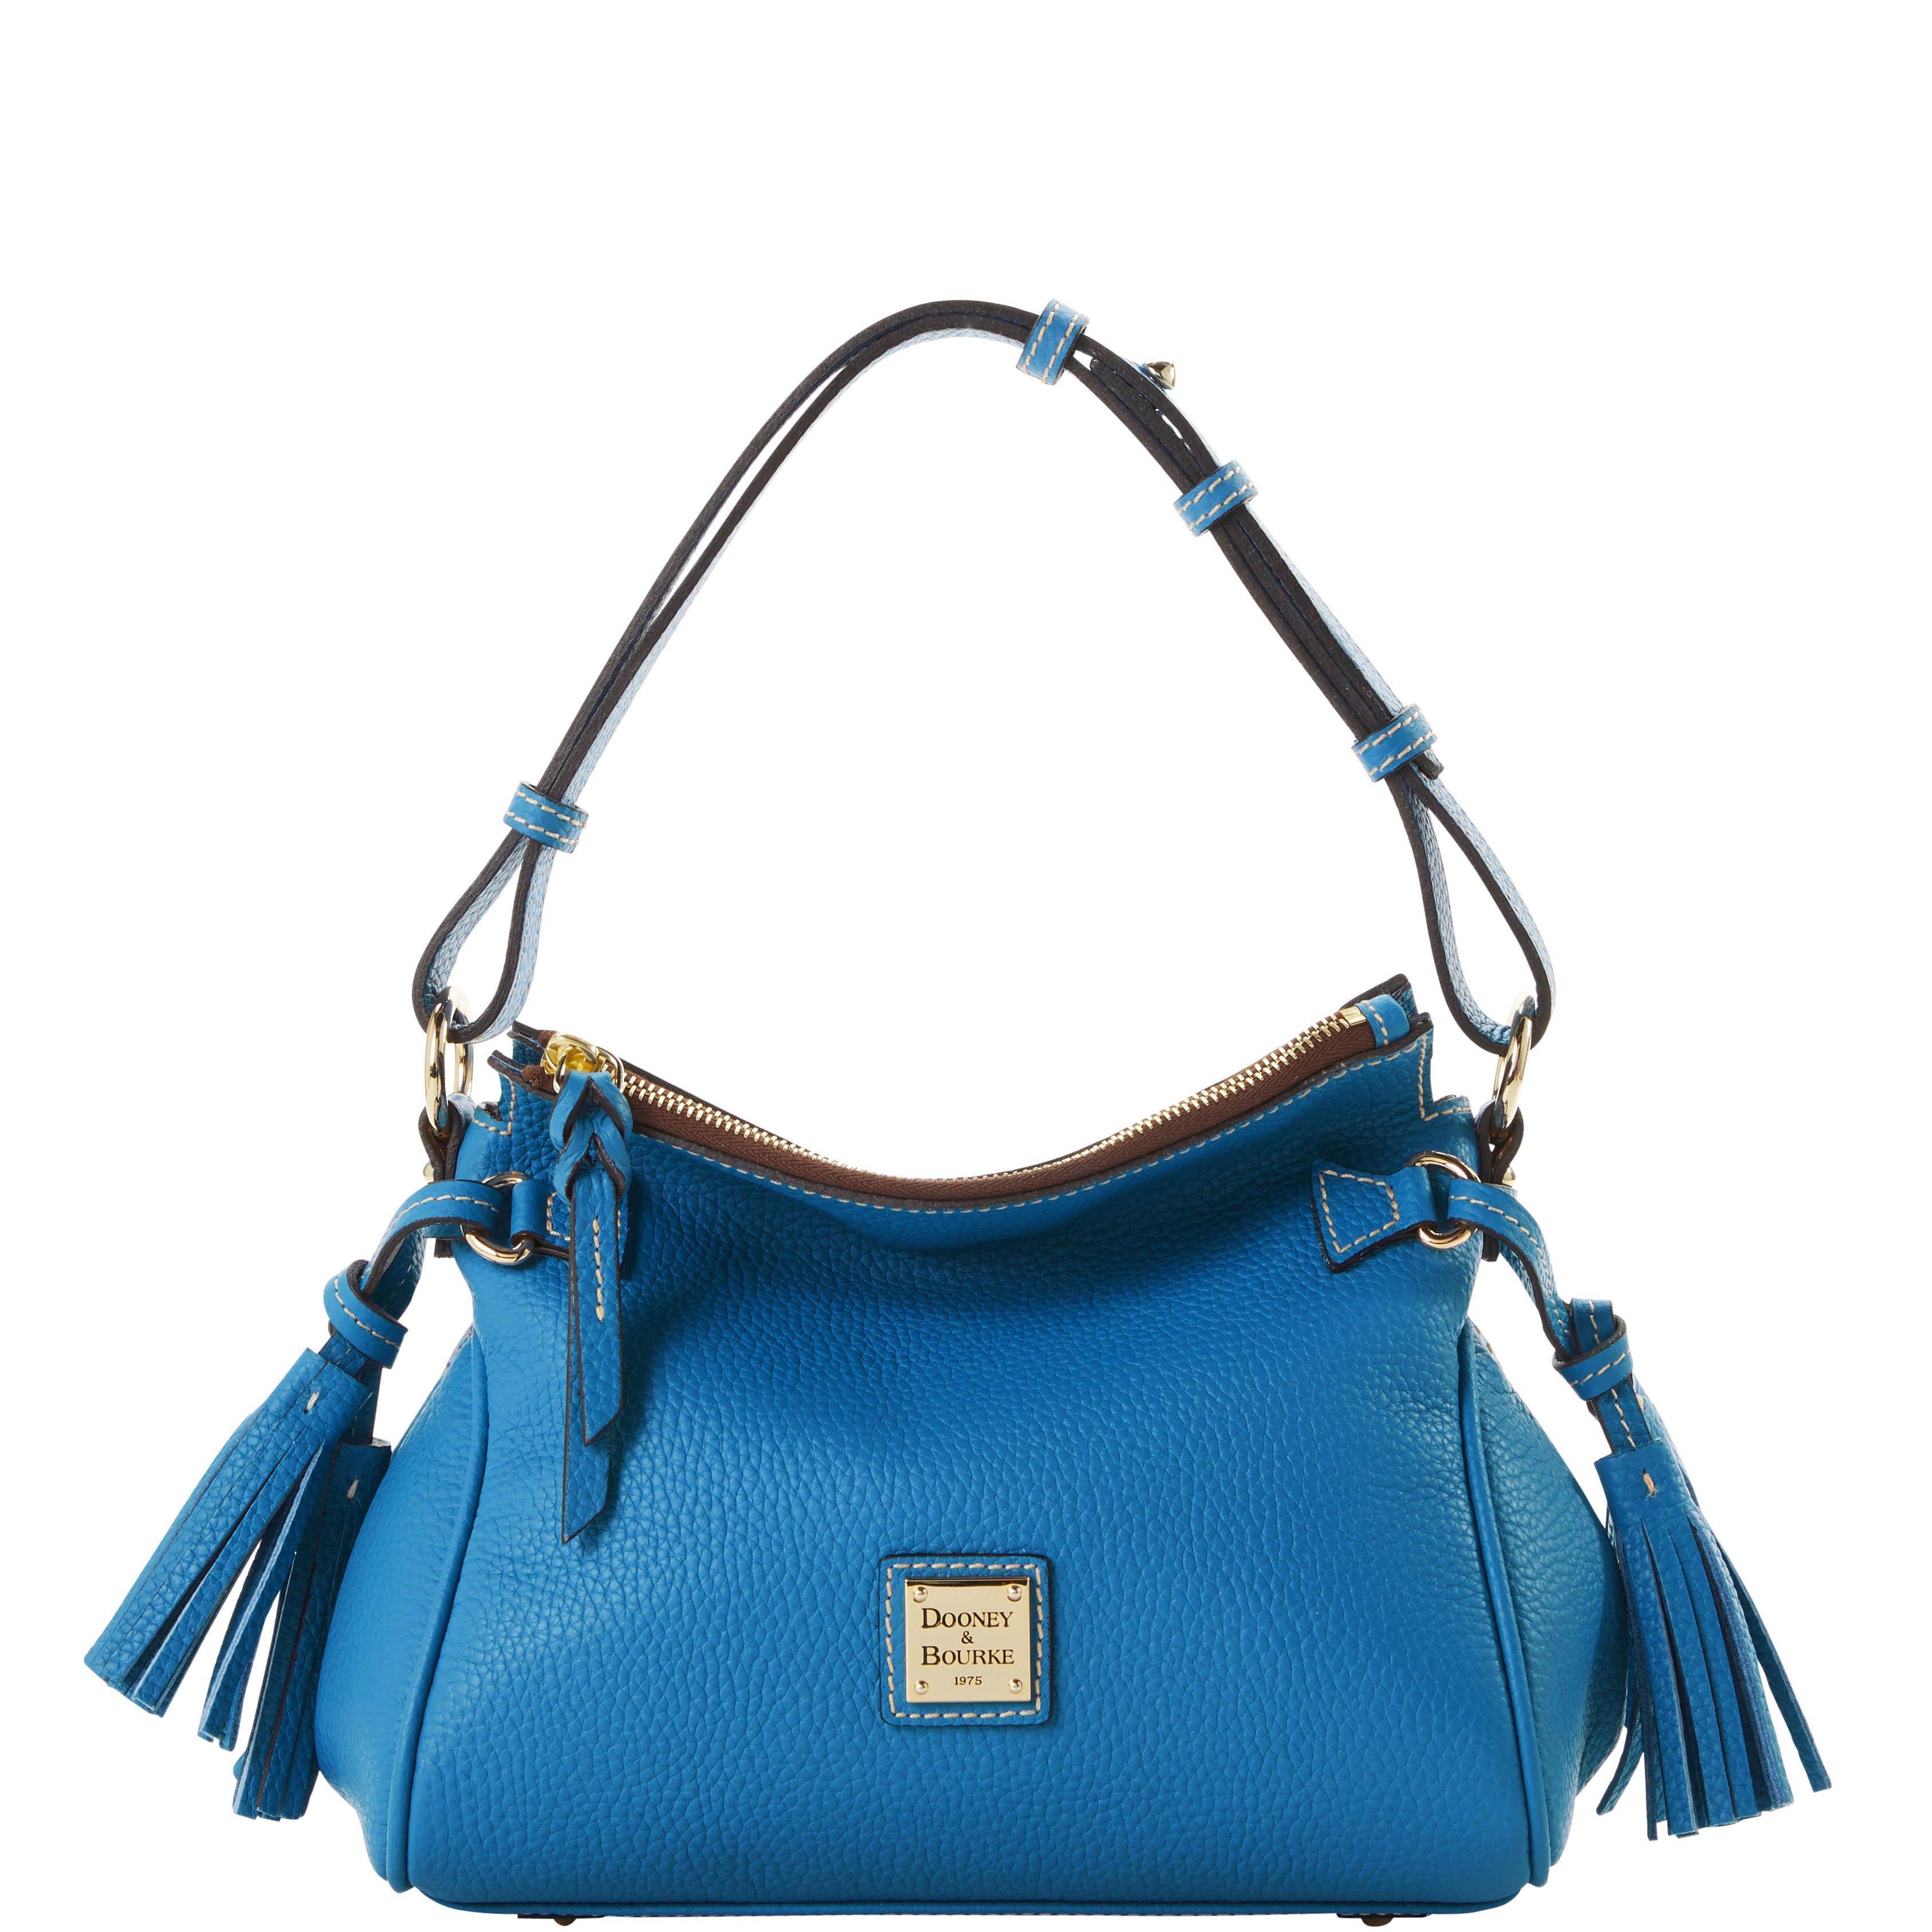 Dooney & Bourke Leather Pebble Grain Tassel Shoulder Bag in Blue - Lyst